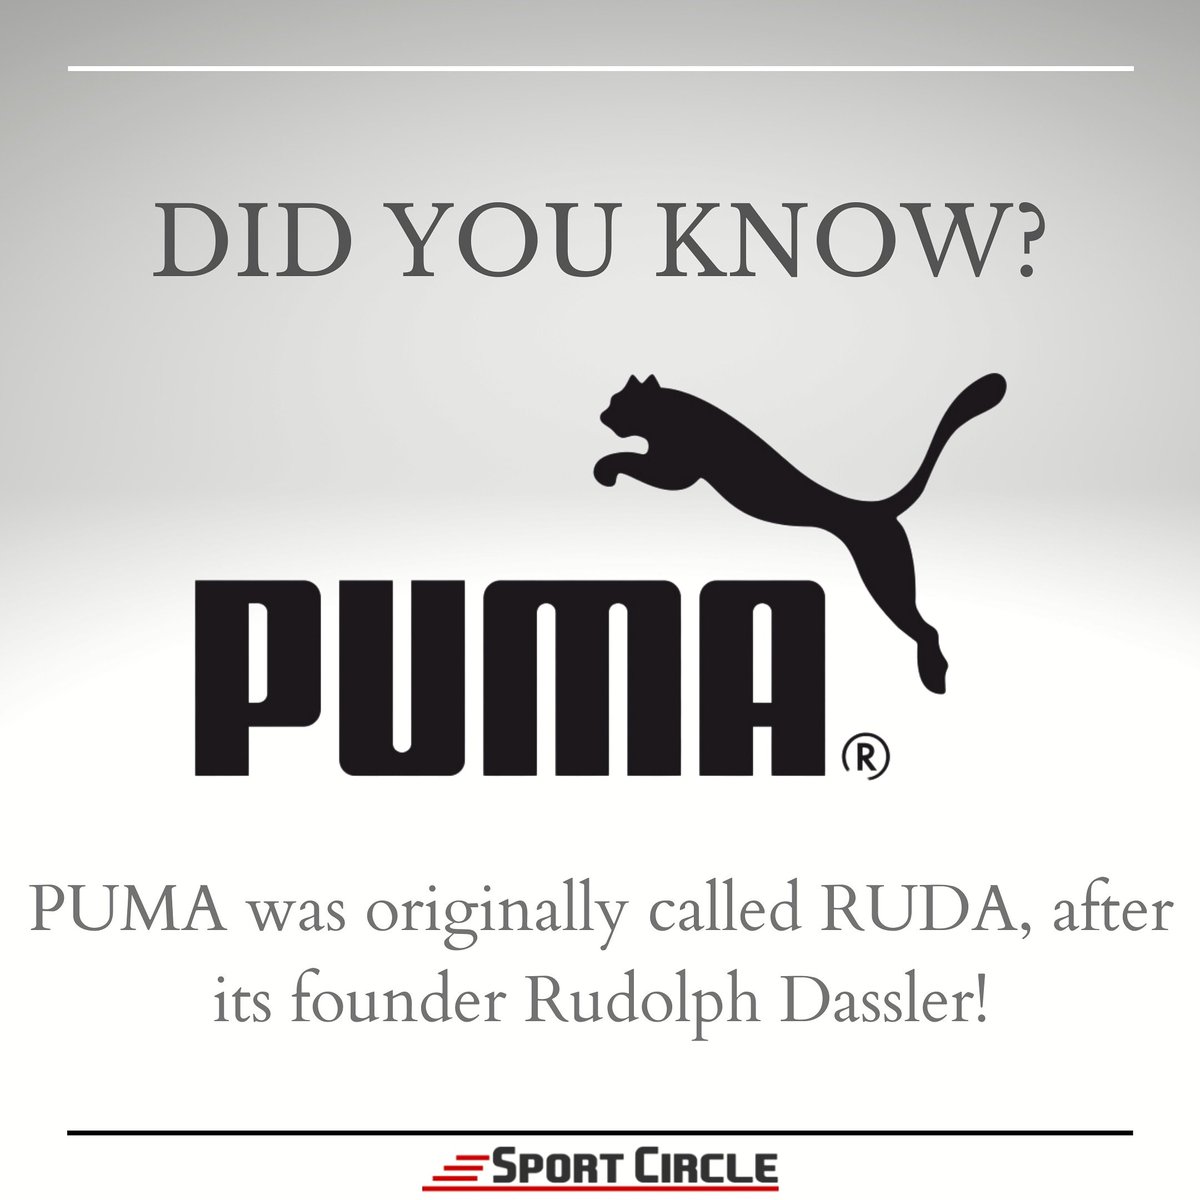 Puma is the third largest sportswear manufacturer in the world, and the biggest sportswear brand in India!
.
.
.
#puma #branding #brandlogo #sports #pumashoes #rudolfdassler #identity #pumaindia